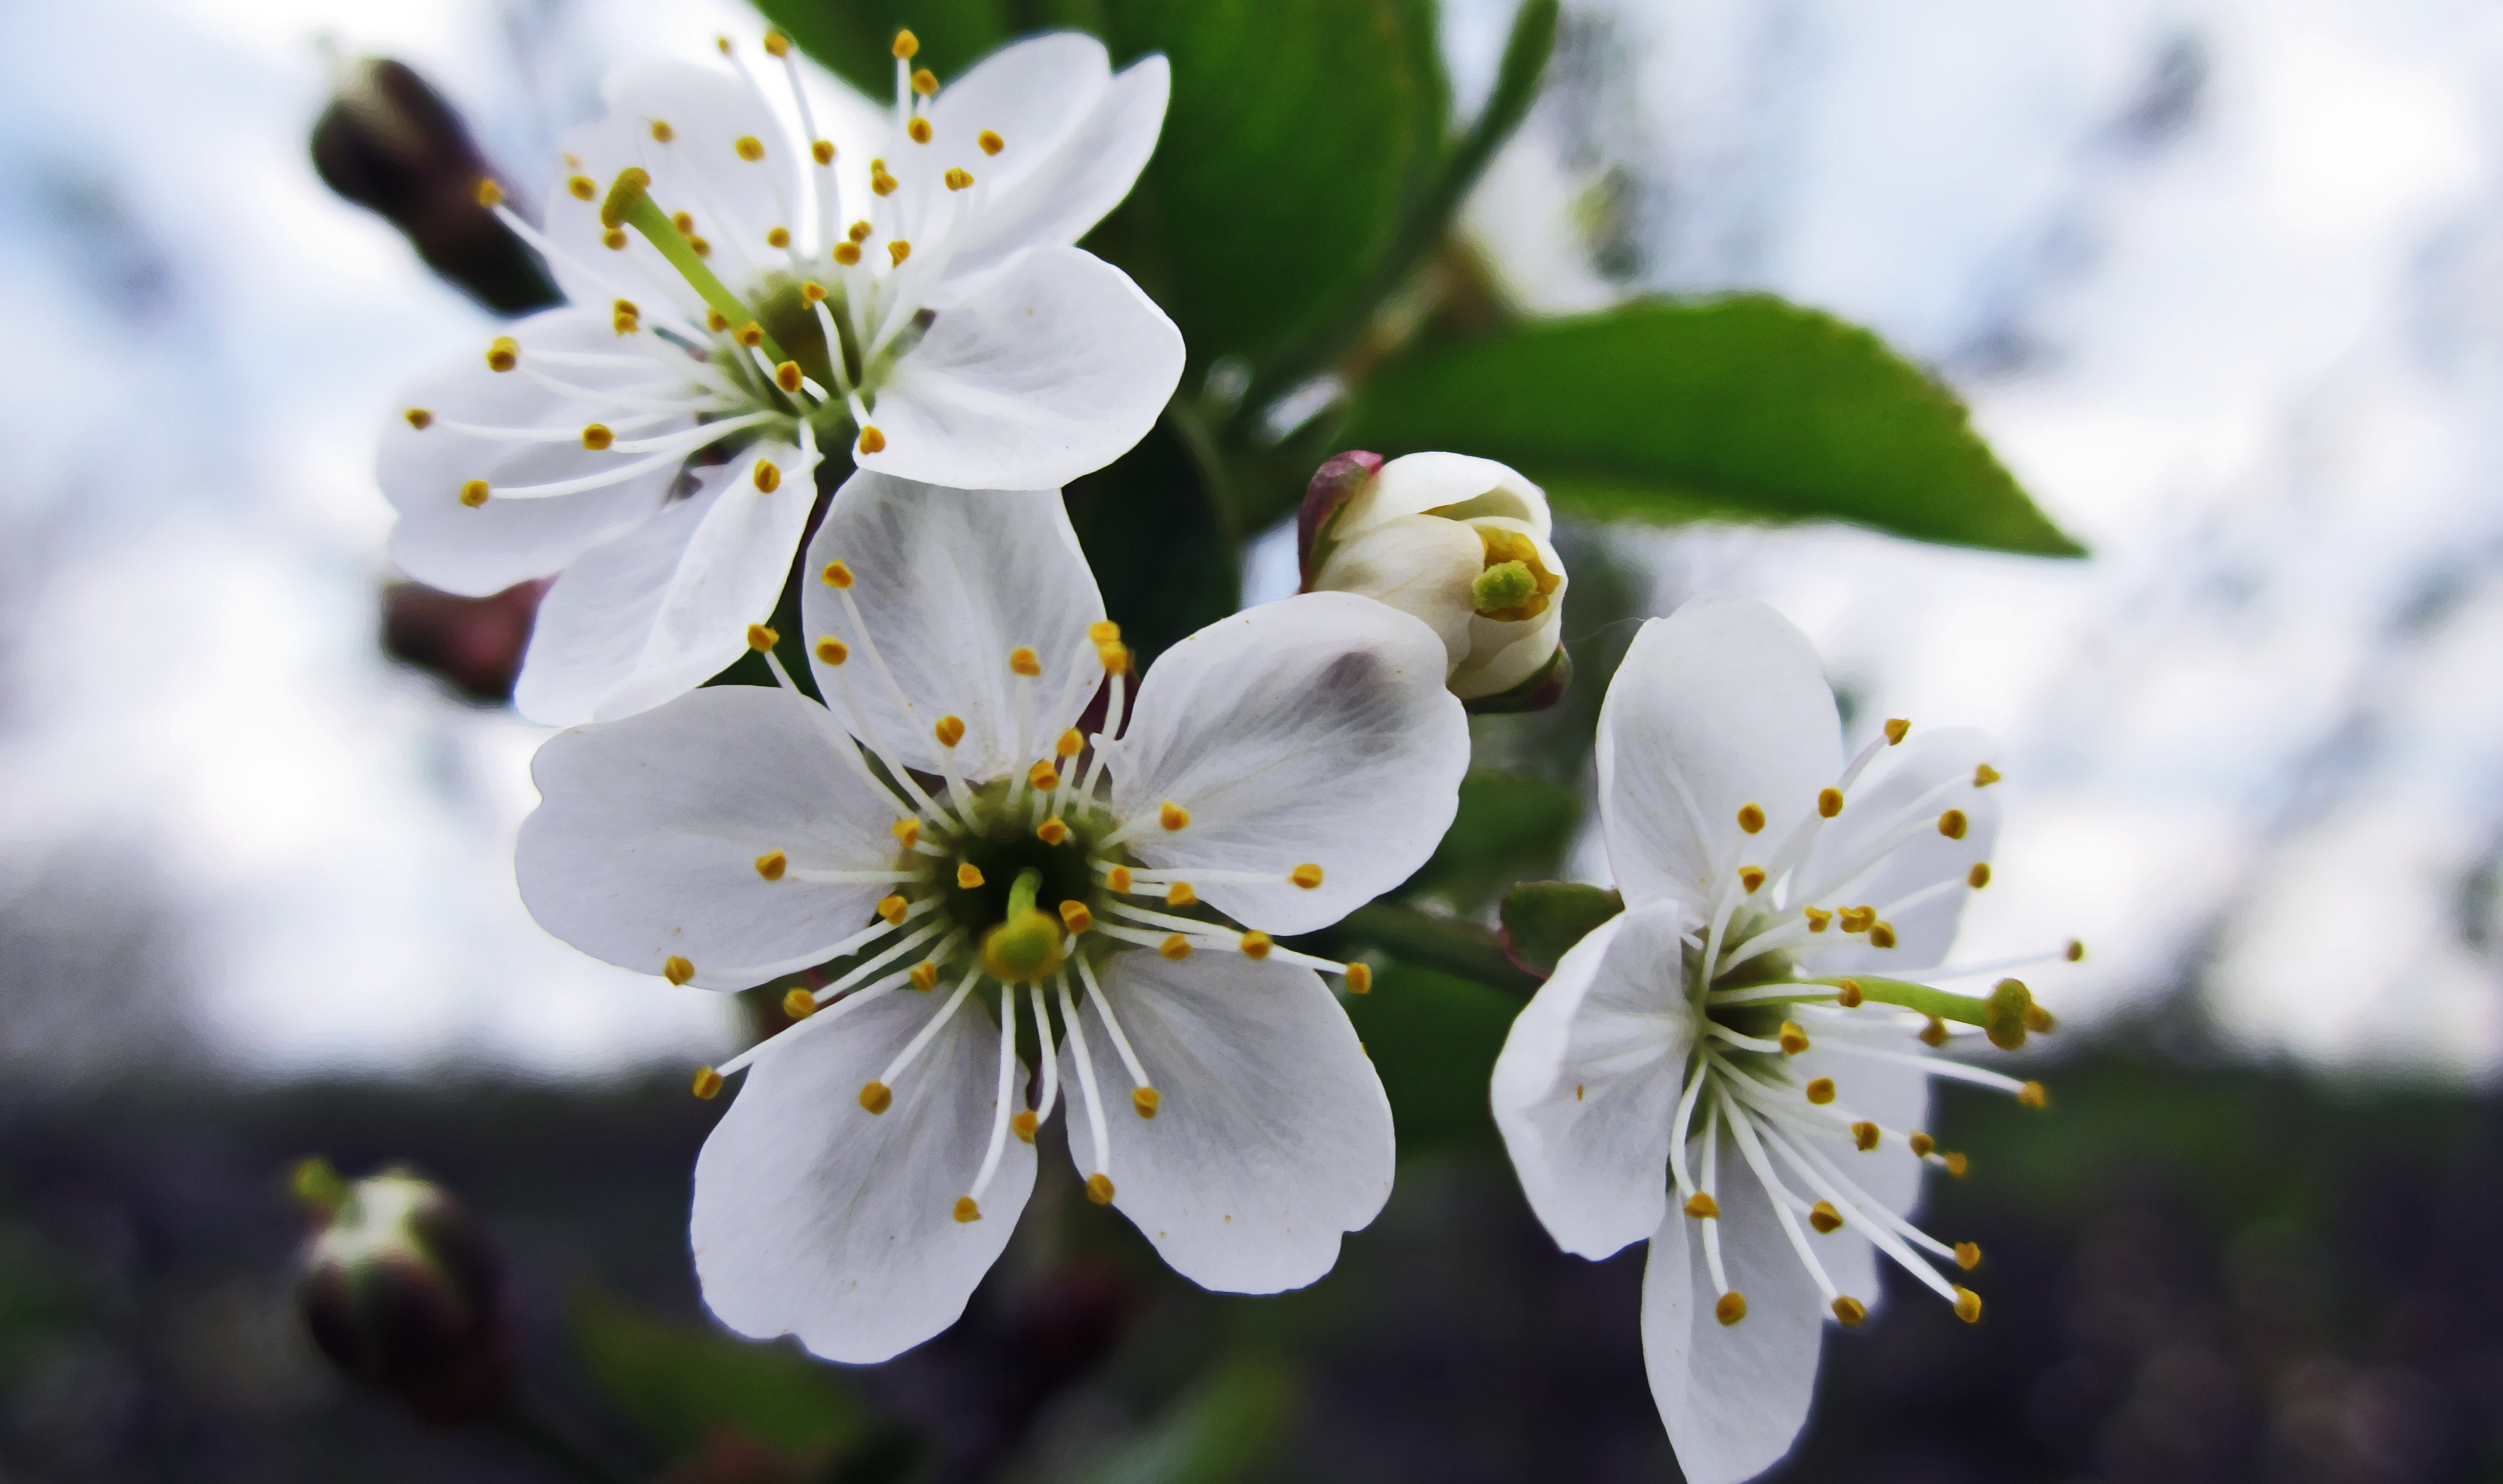 flowers, Photography, Macro, Cherry blossom, Closeup, White flowers